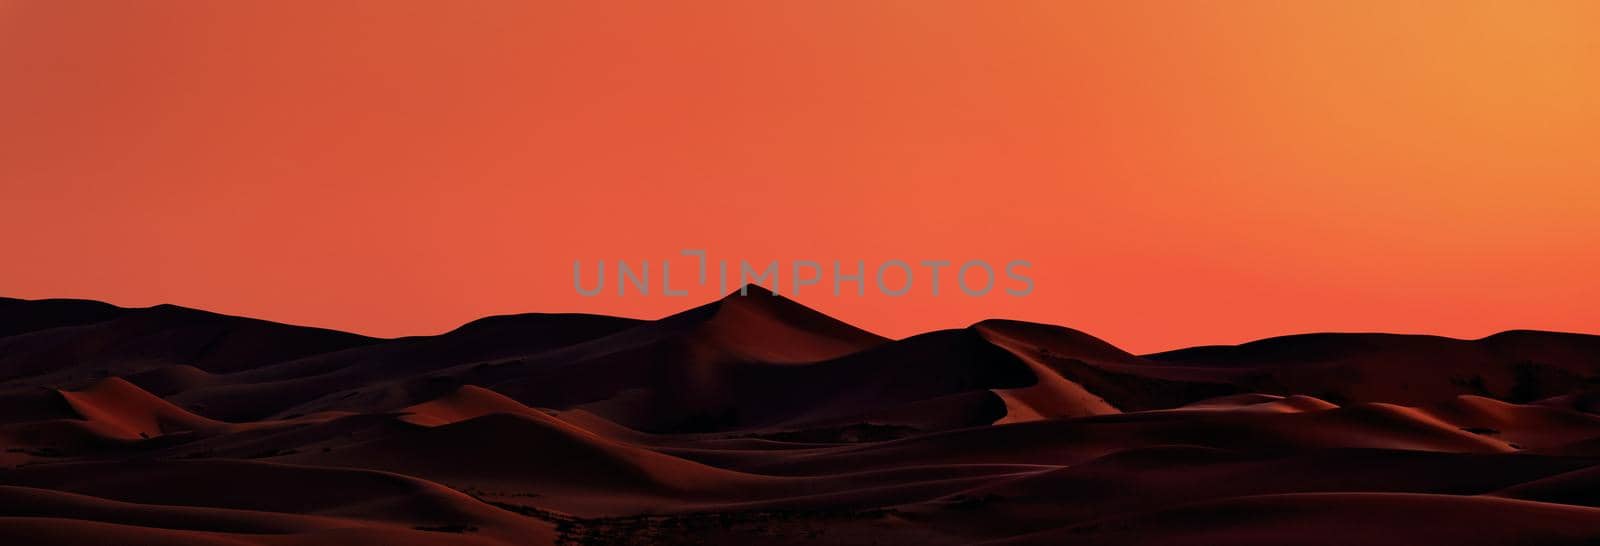 Beautiful Sand dunes in the Gobi desert, Mongolia. View of the beautiful sand dunes. Fire dunes at dawn by EvgeniyQW